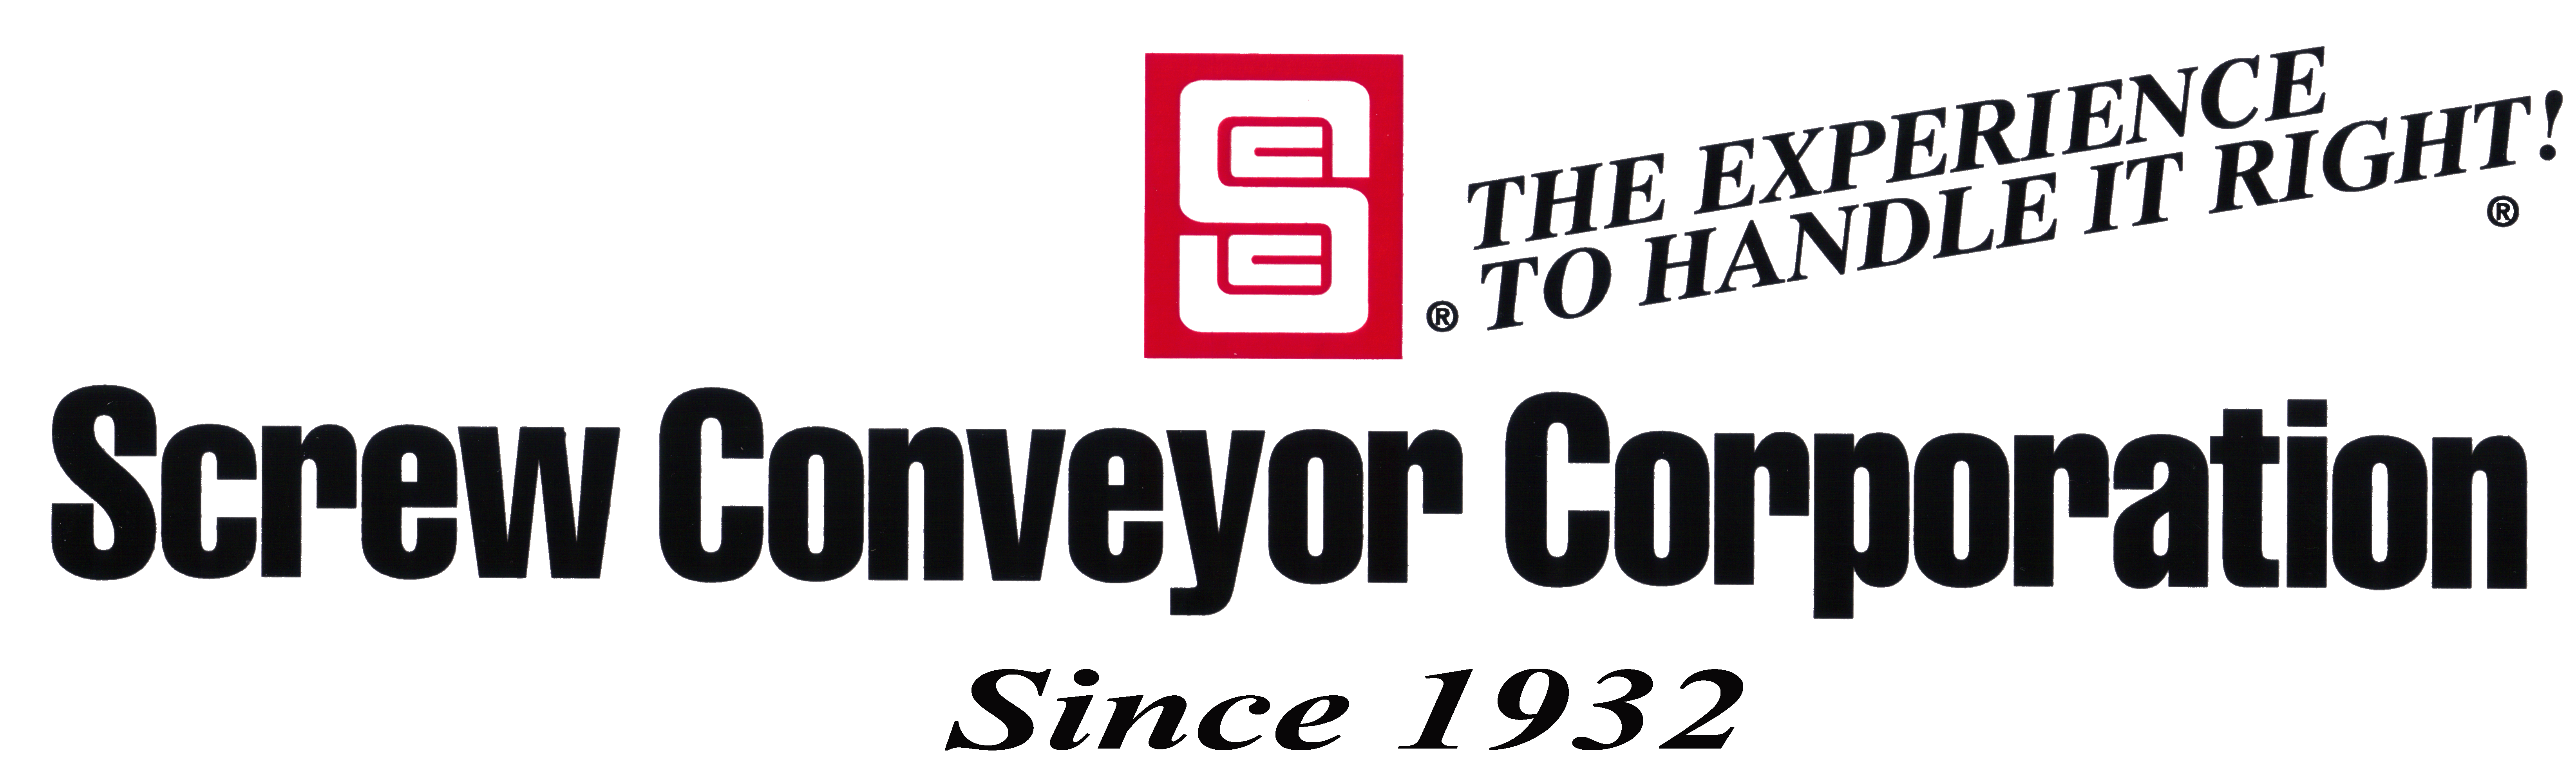 Screw Conveyor Corporation